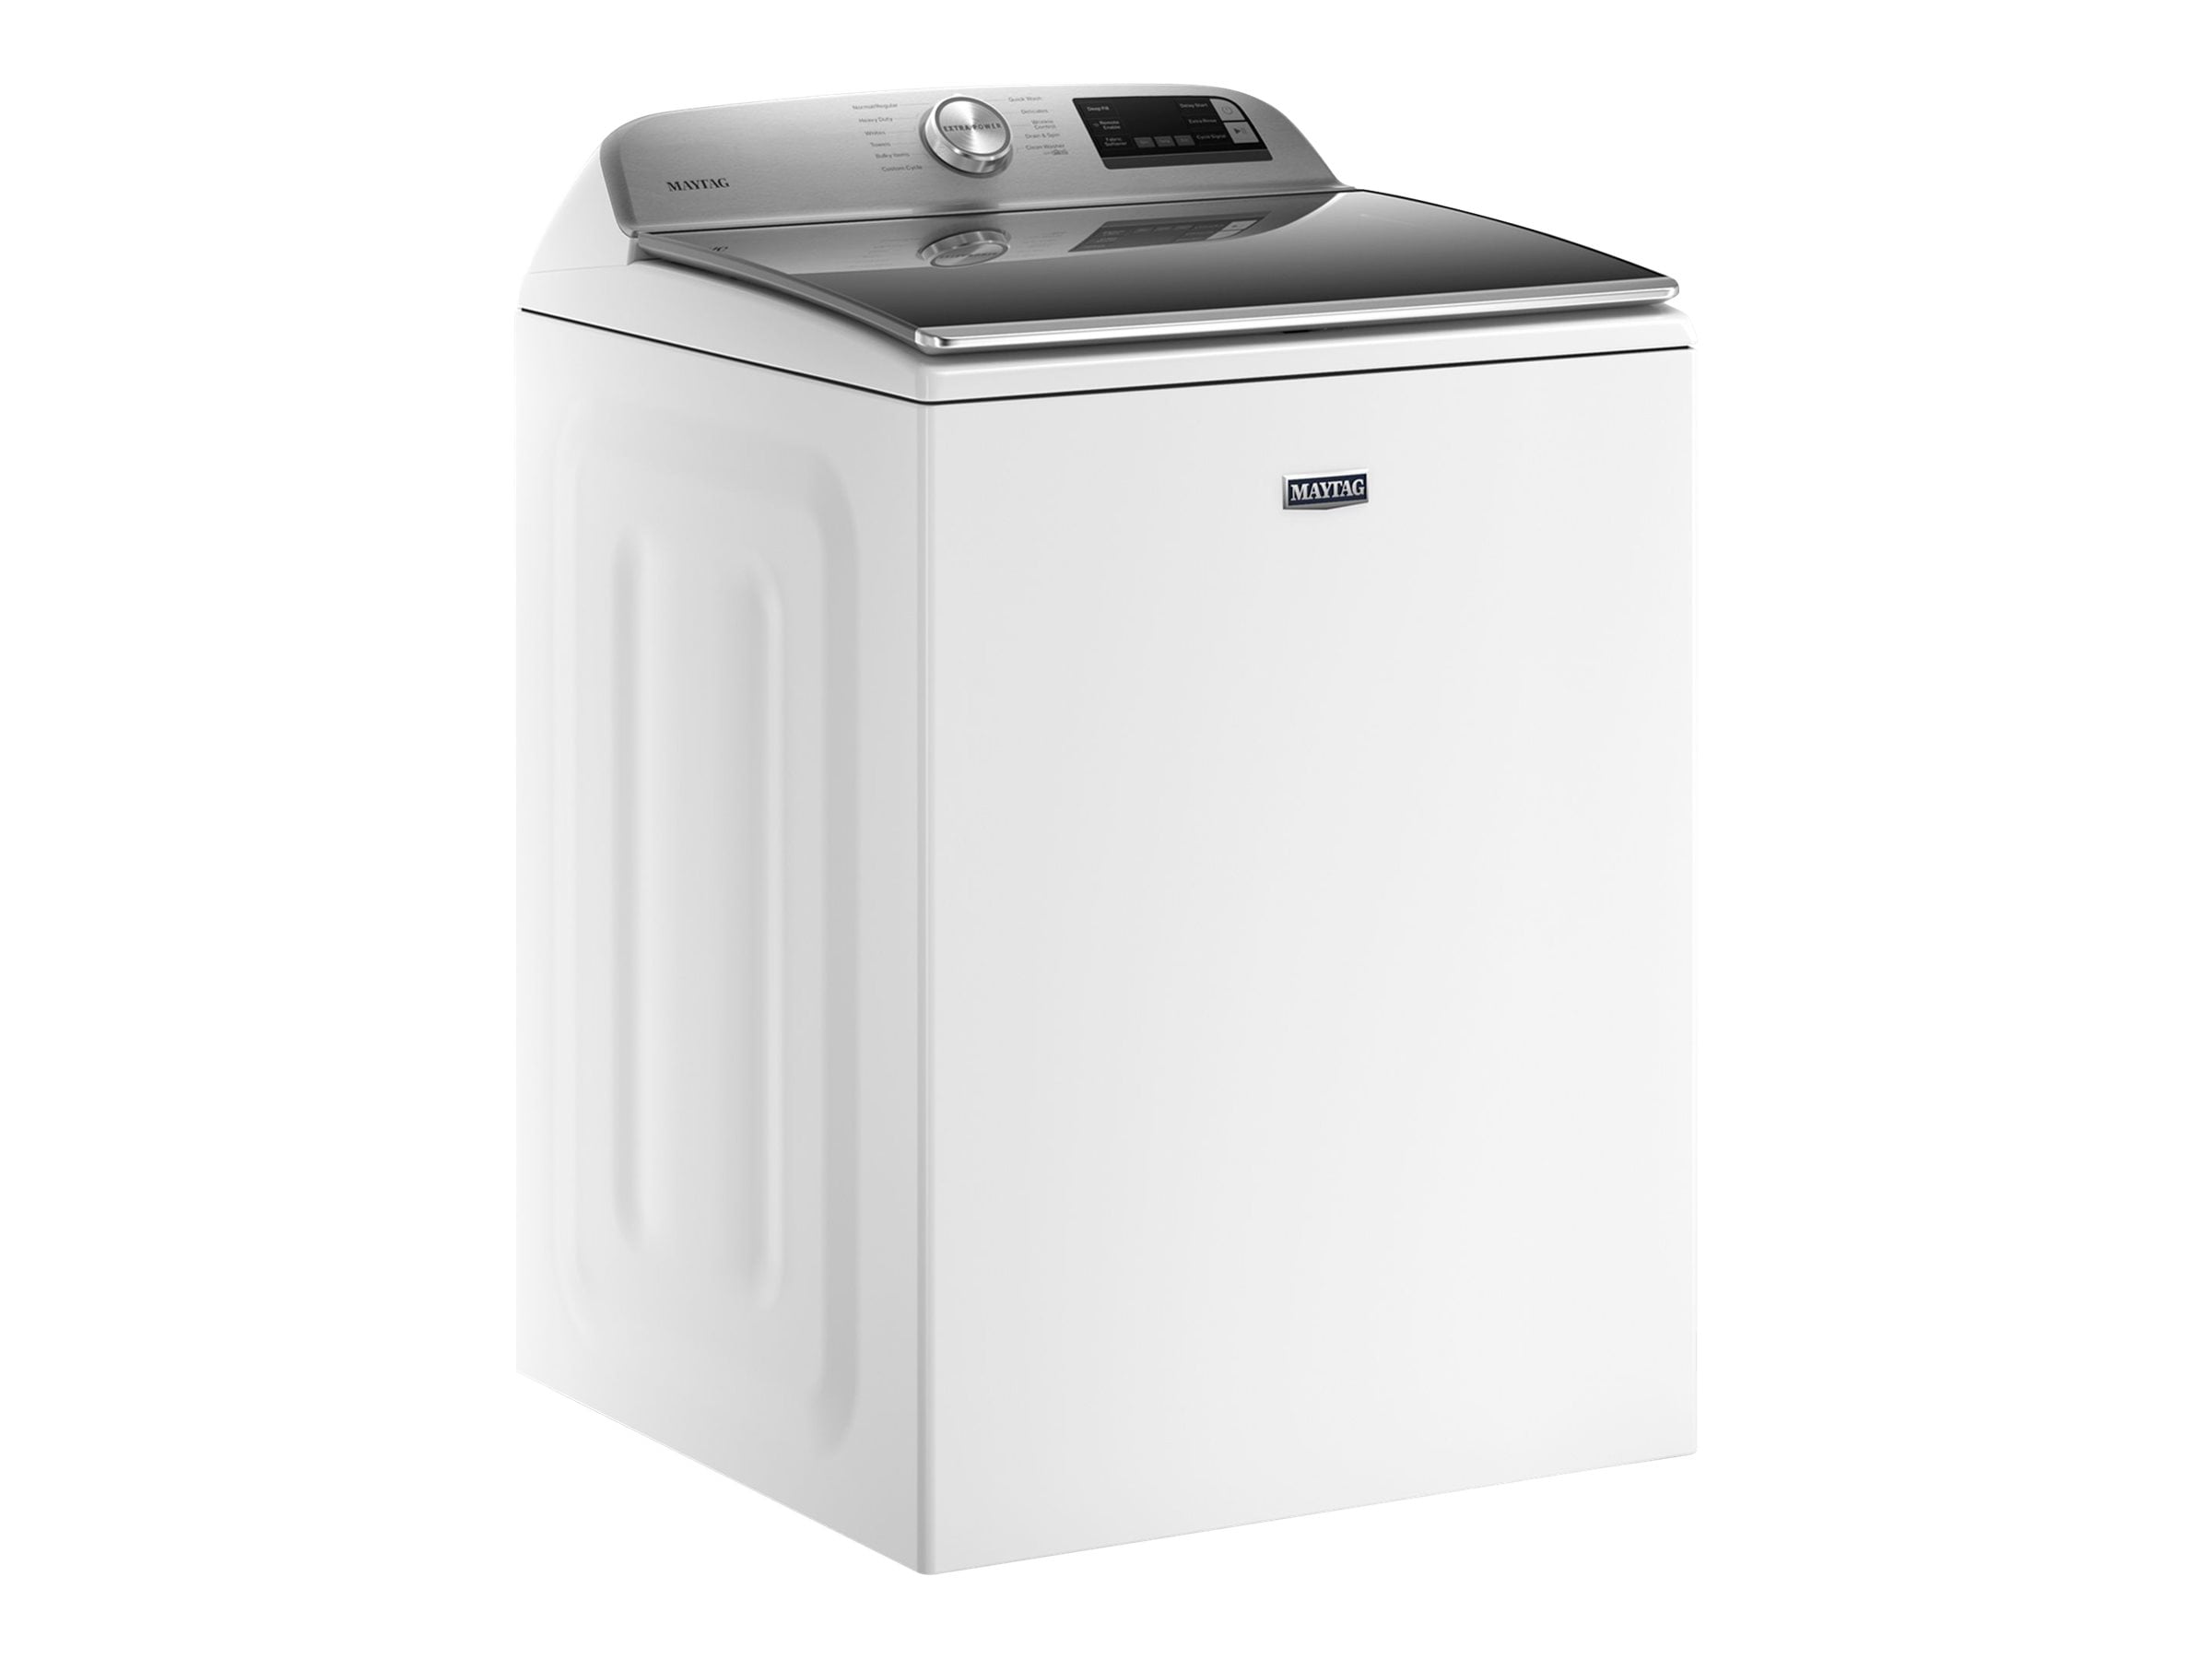 Magic Chef 1.5 Cu. ft. Compact Electric Dryer, White, 19.5 in L x